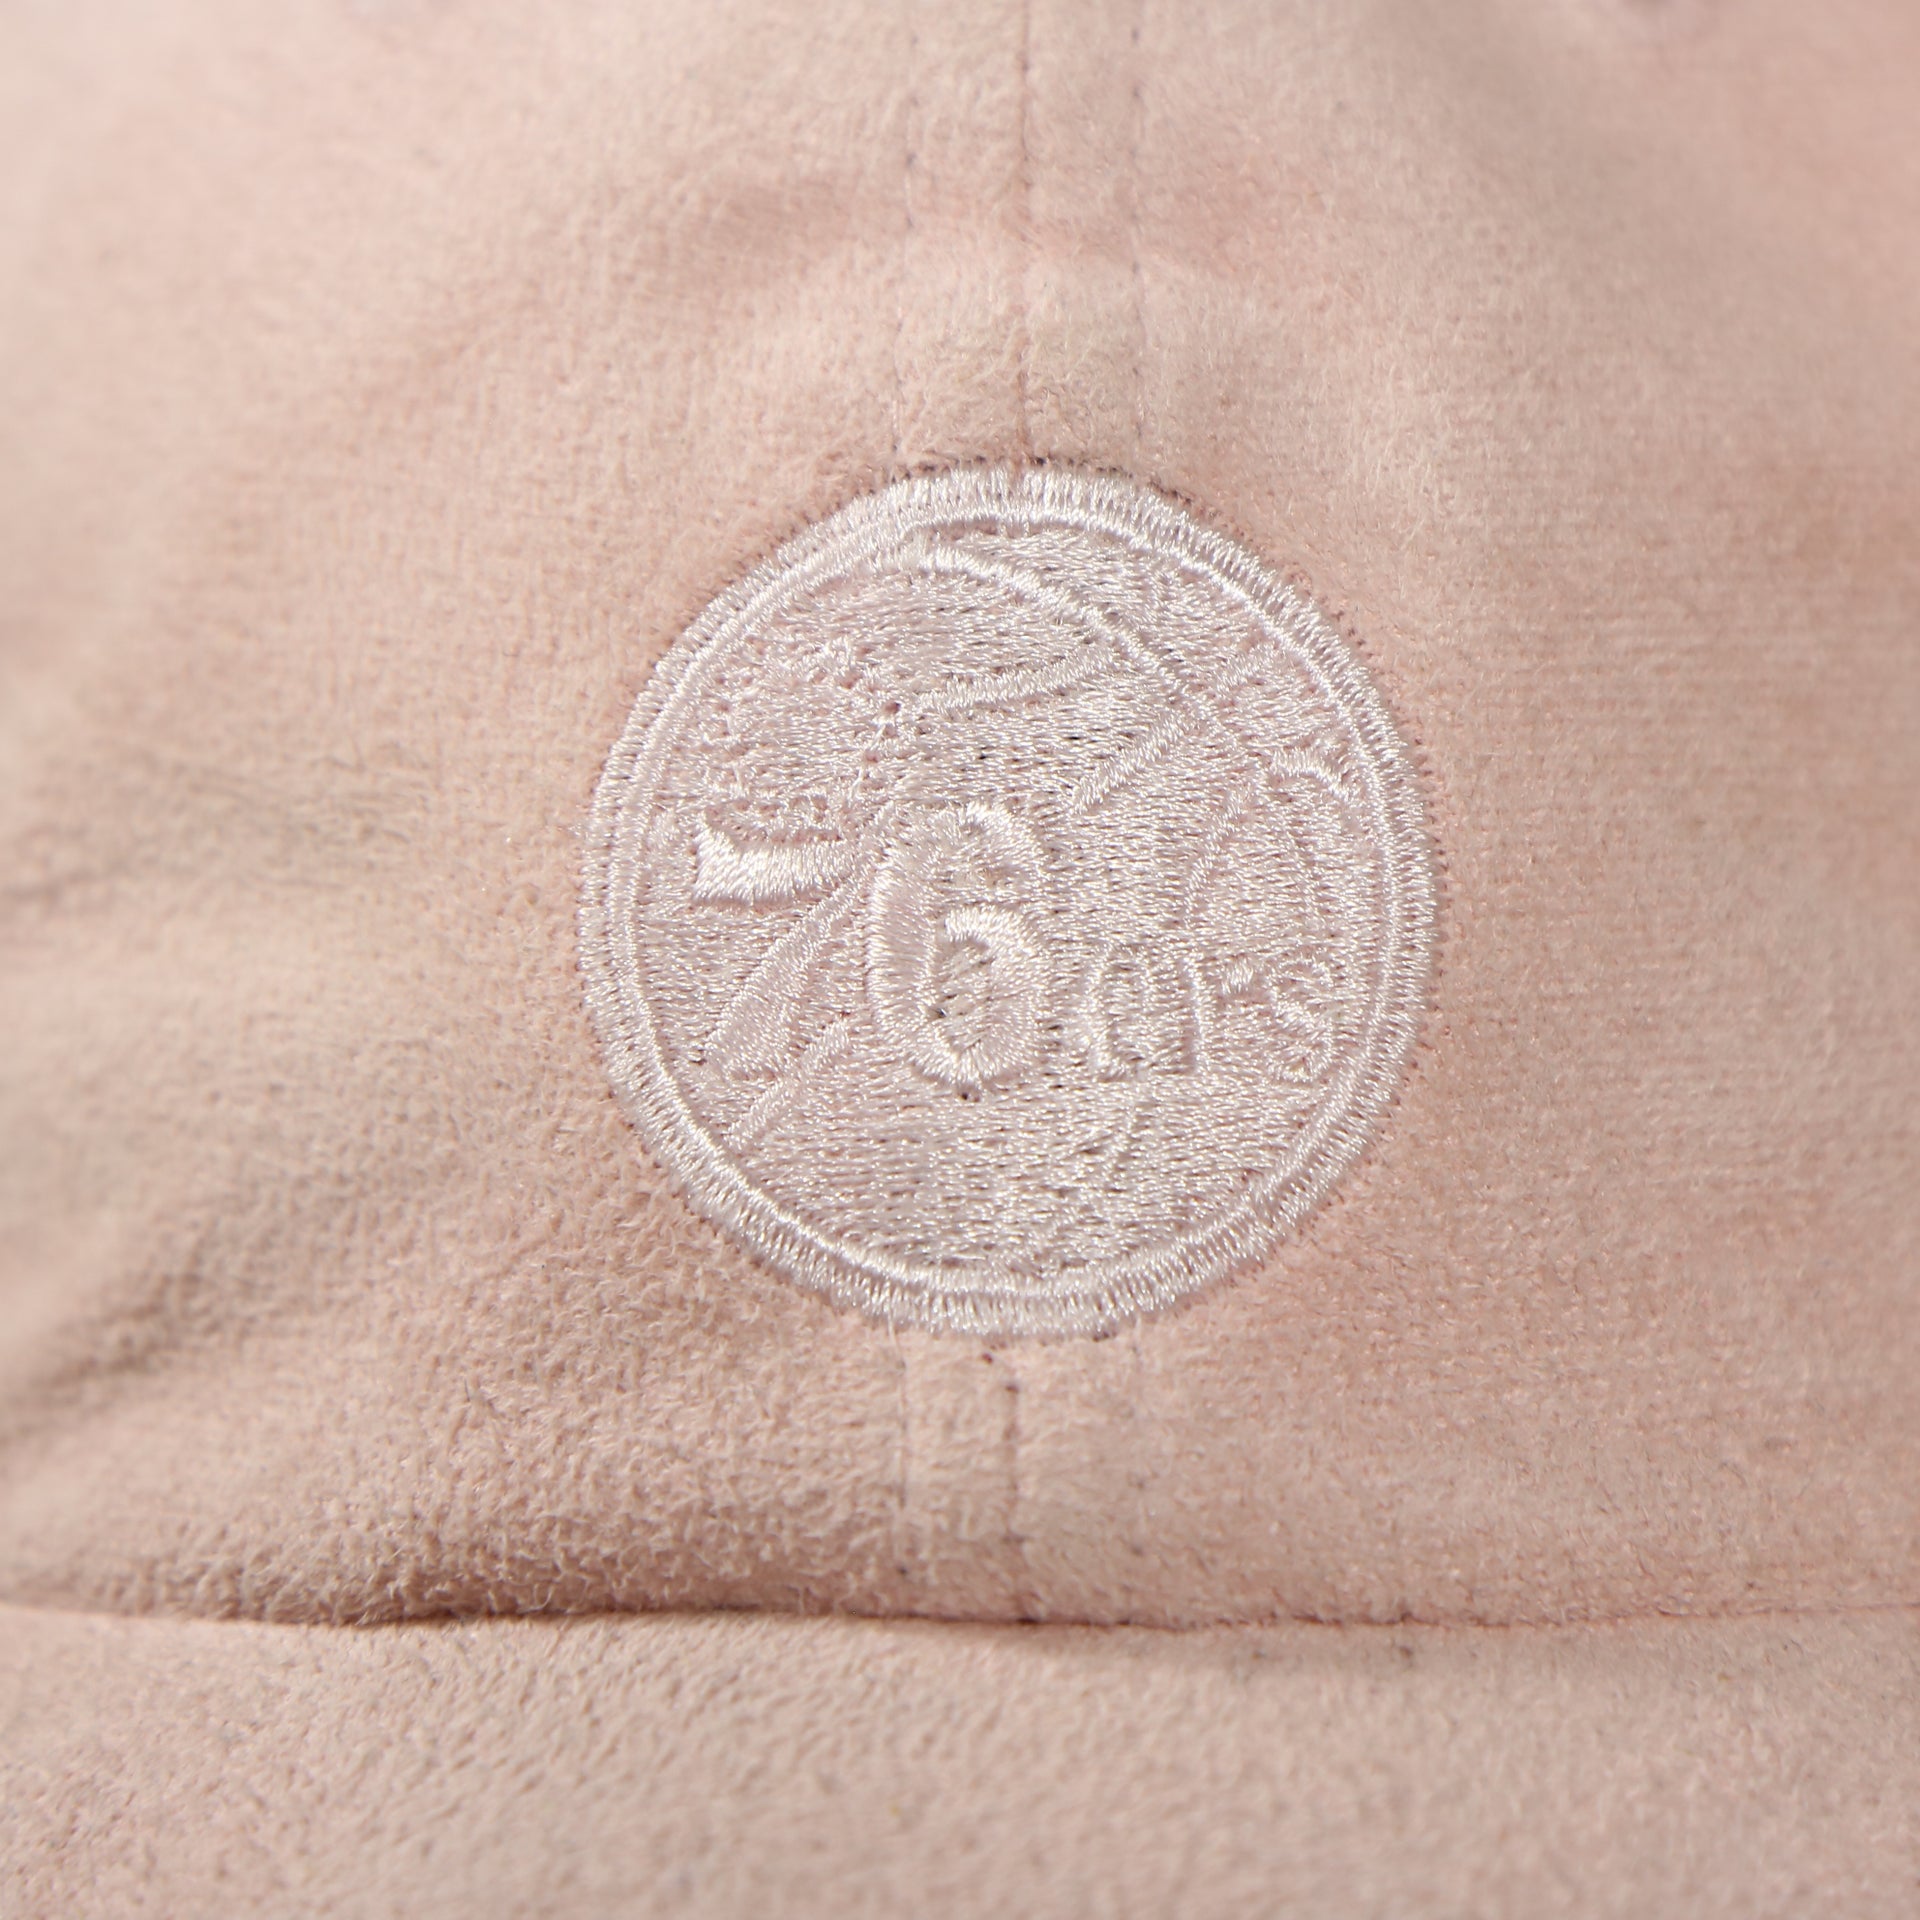 76ers logo on the Philadelphia 76ers Micro Suede Pink Adjustable Baseball Cap